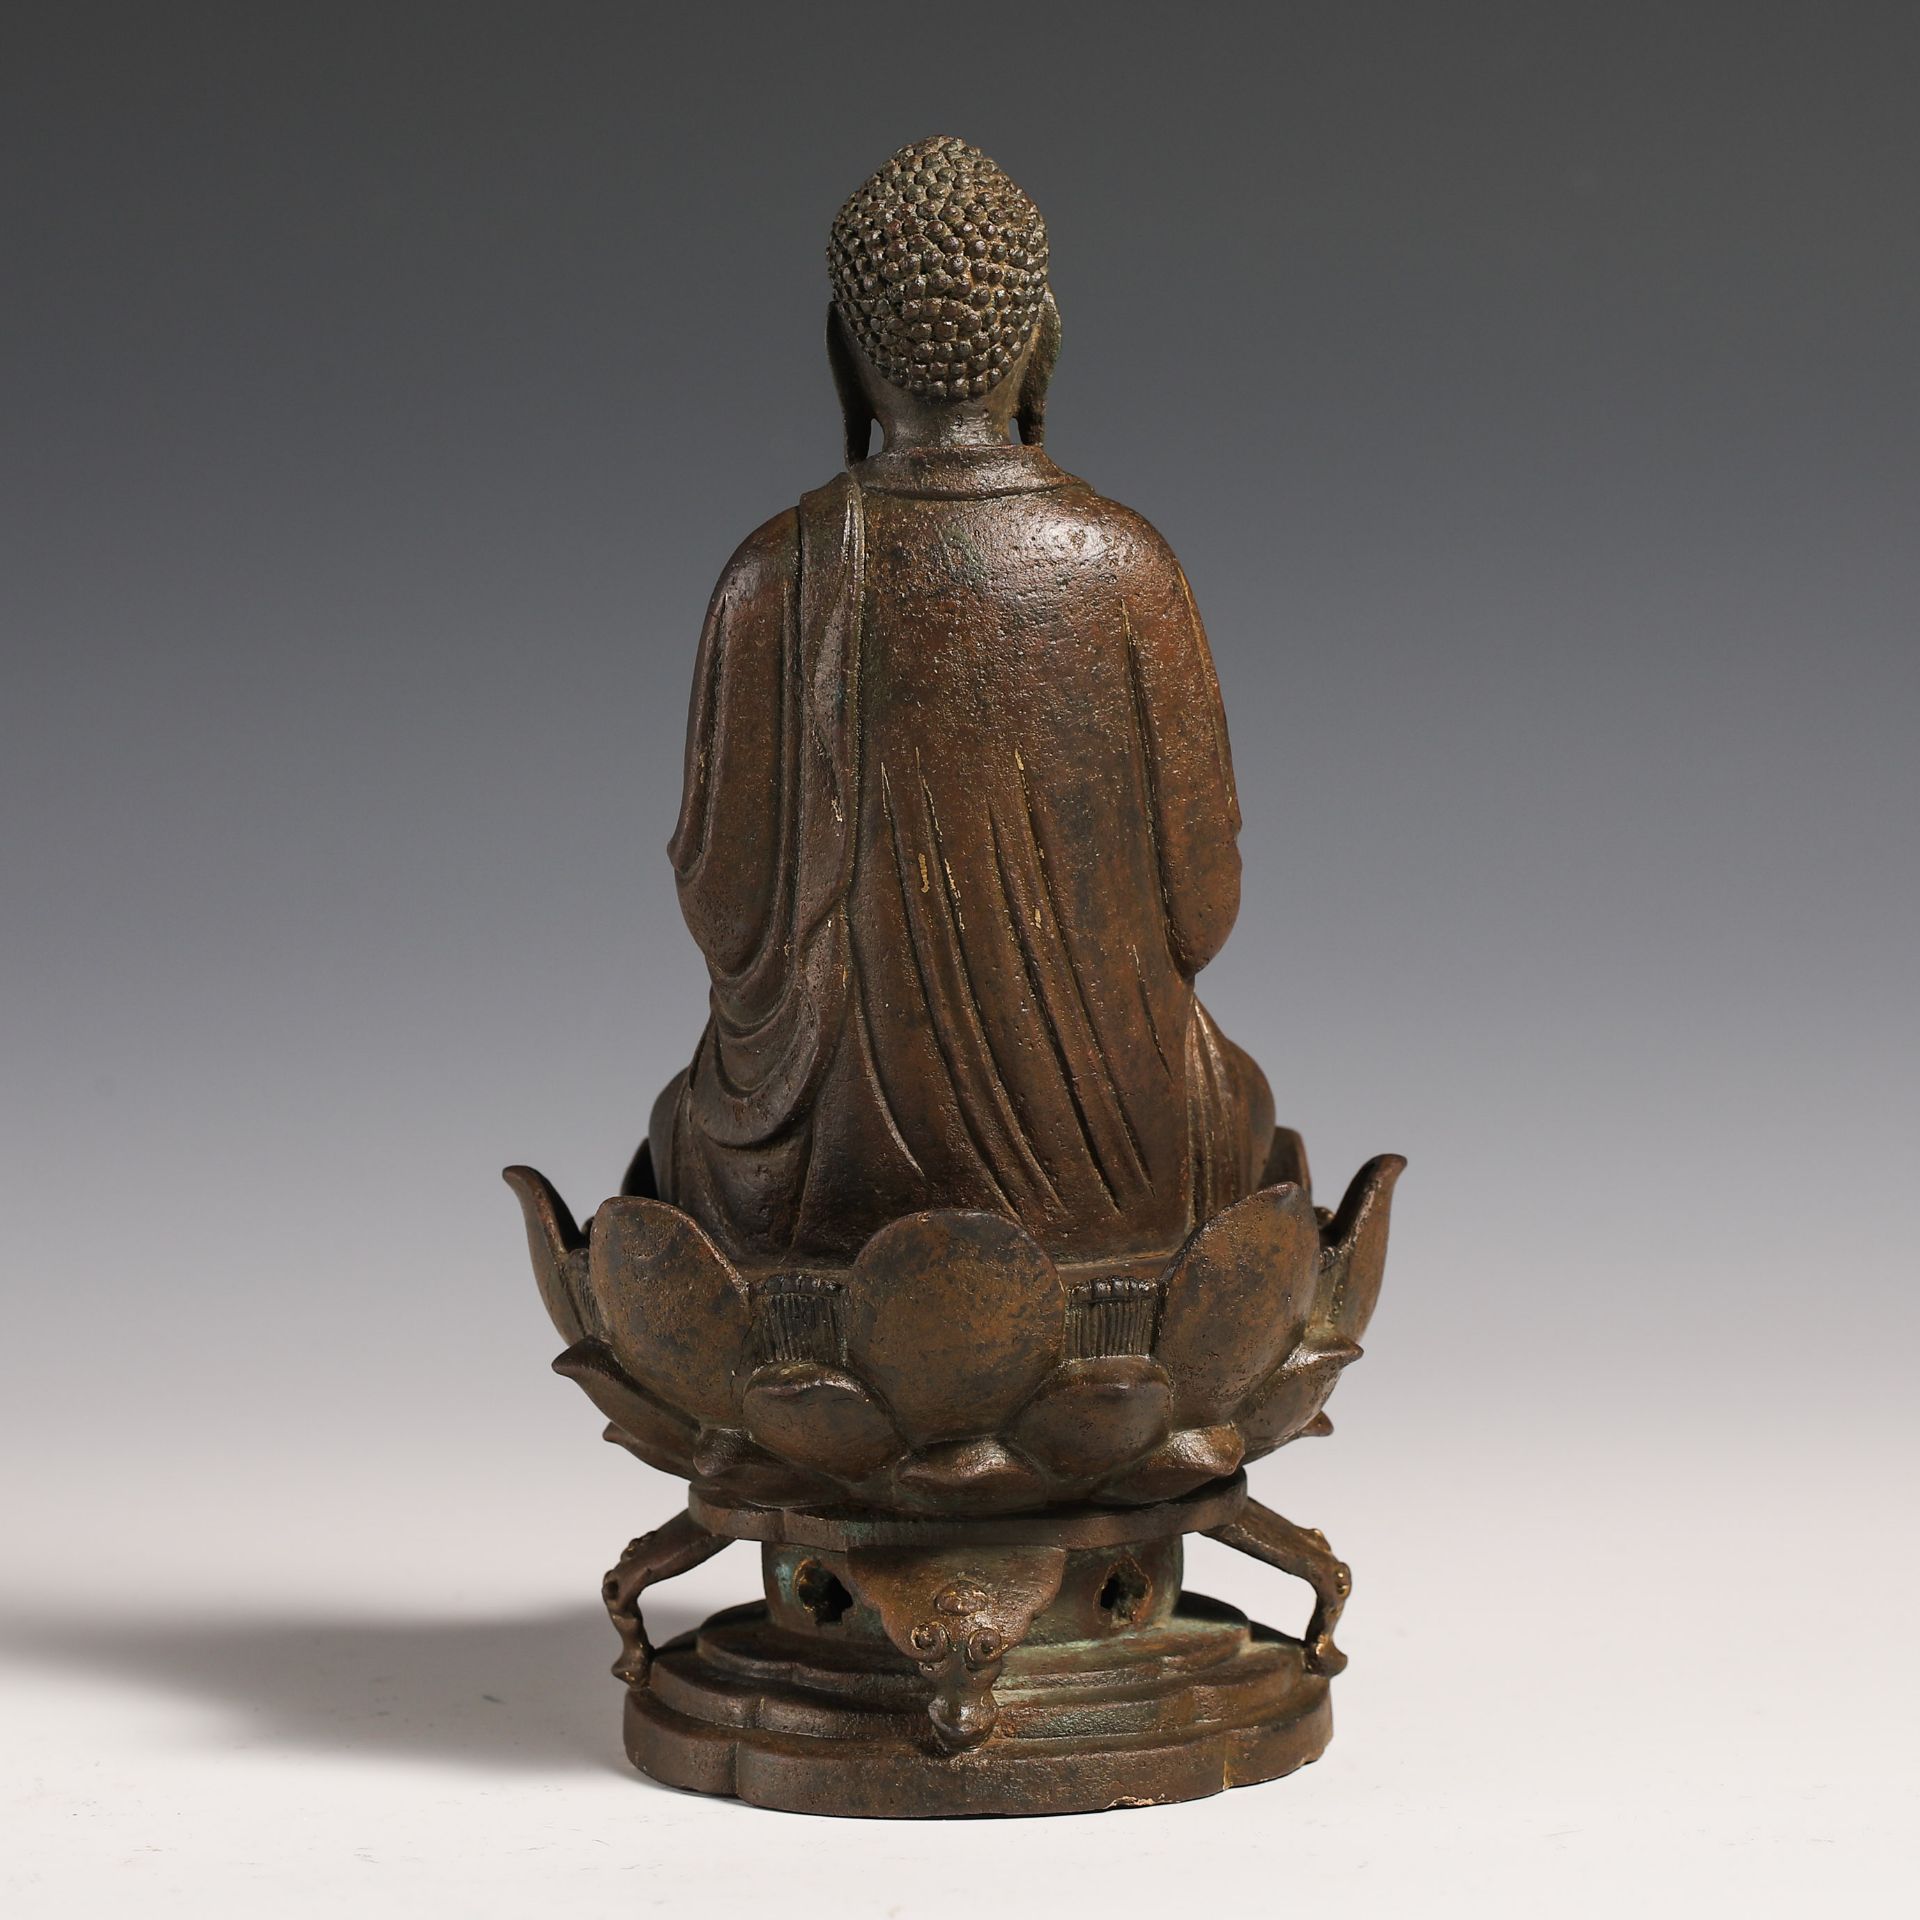 Liao Dynasty Buddha statue - Image 11 of 17